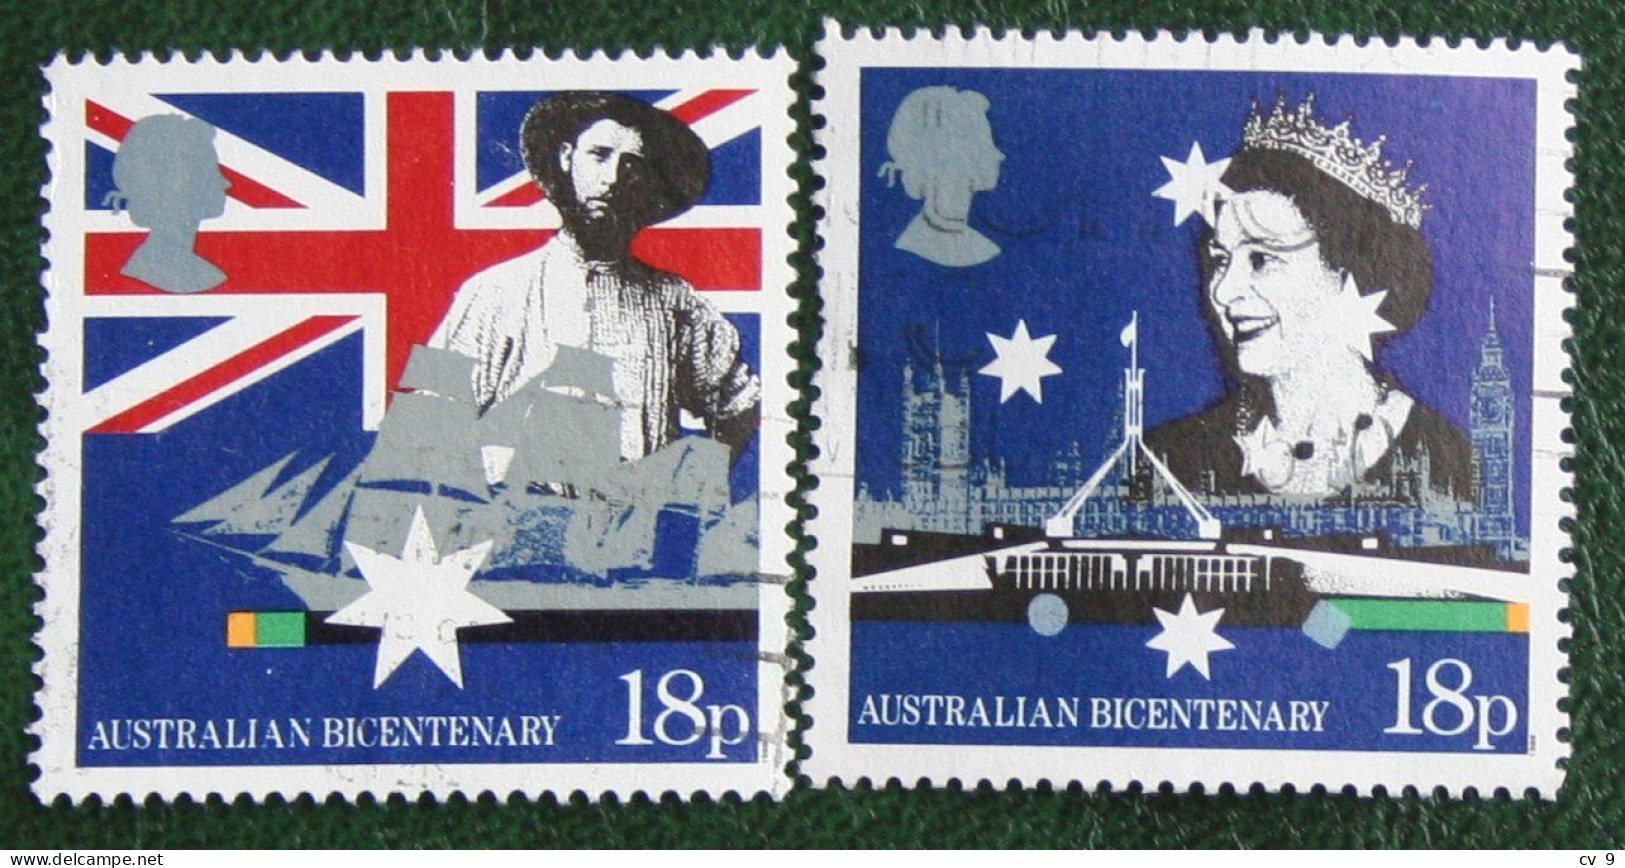 AUSTRALIAN BICENTENARY (Mi 1151-1152) 1988 Used Gebruikt Oblitere ENGLAND GRANDE-BRETAGNE GB GREAT BRITAIN - Used Stamps